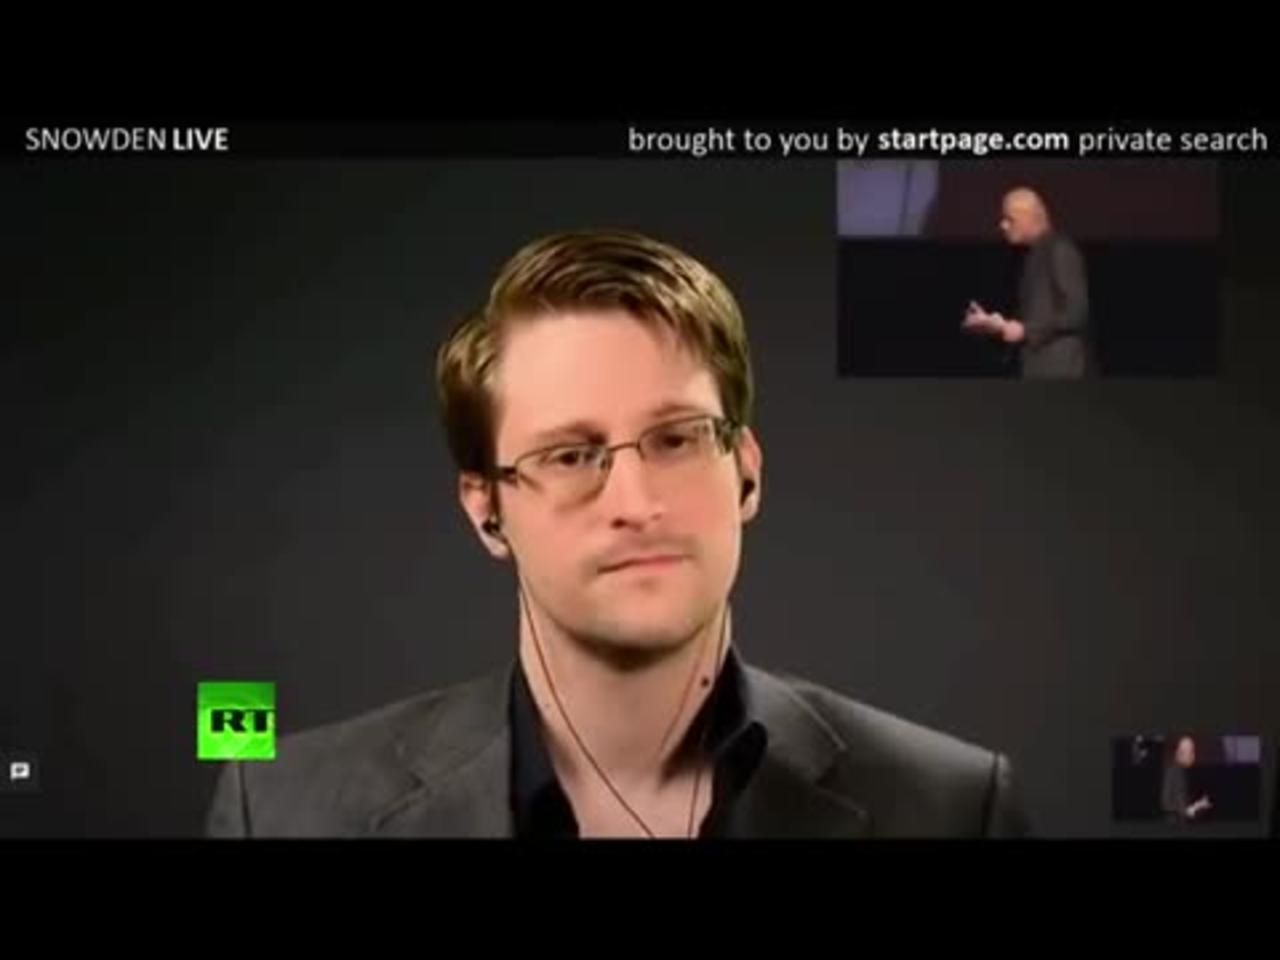 Edward Snowden Signal app